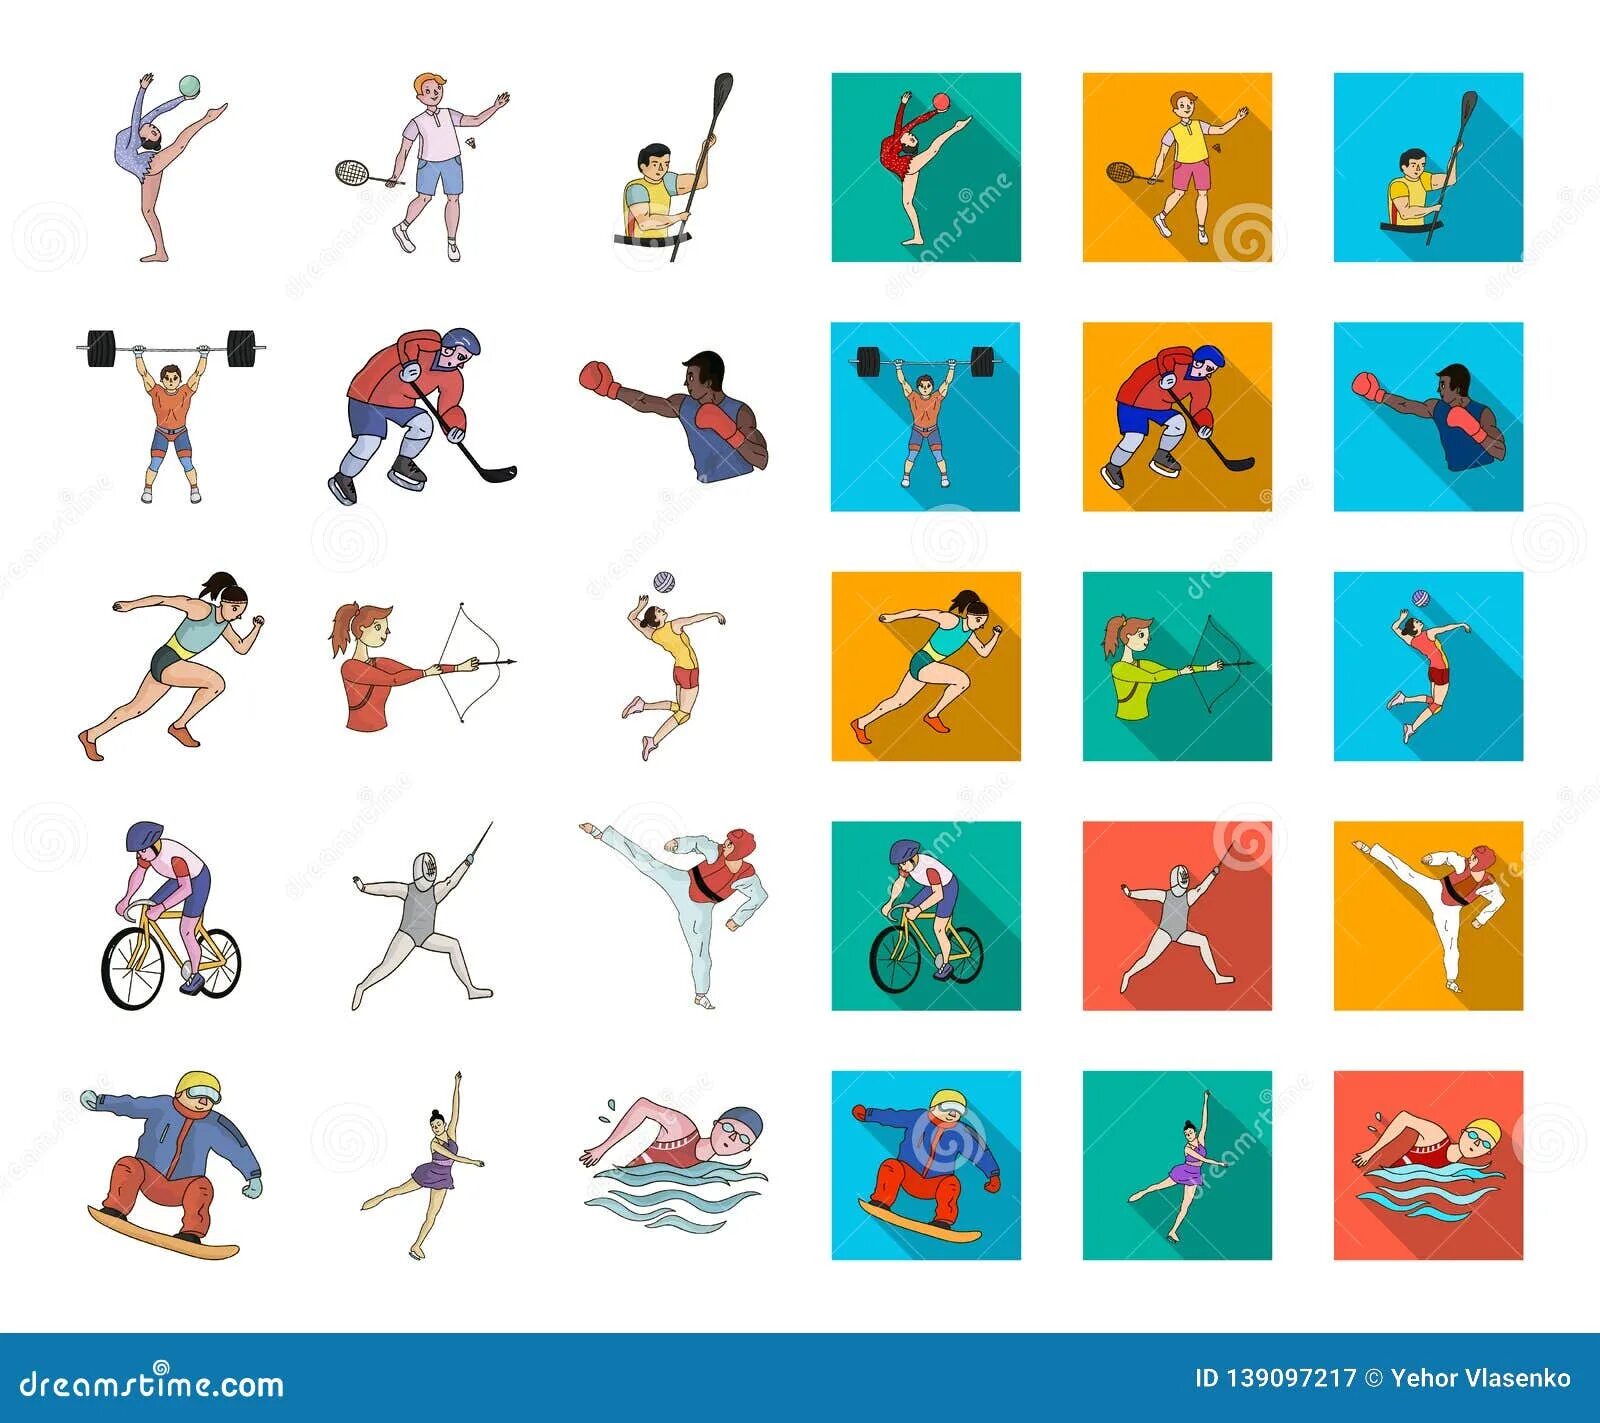 All kinds of sports. Изображения видов спорта. Атрибуты для летних видов спорта для детей. Знаки видов спорта. Карточки виды спорта для детей.